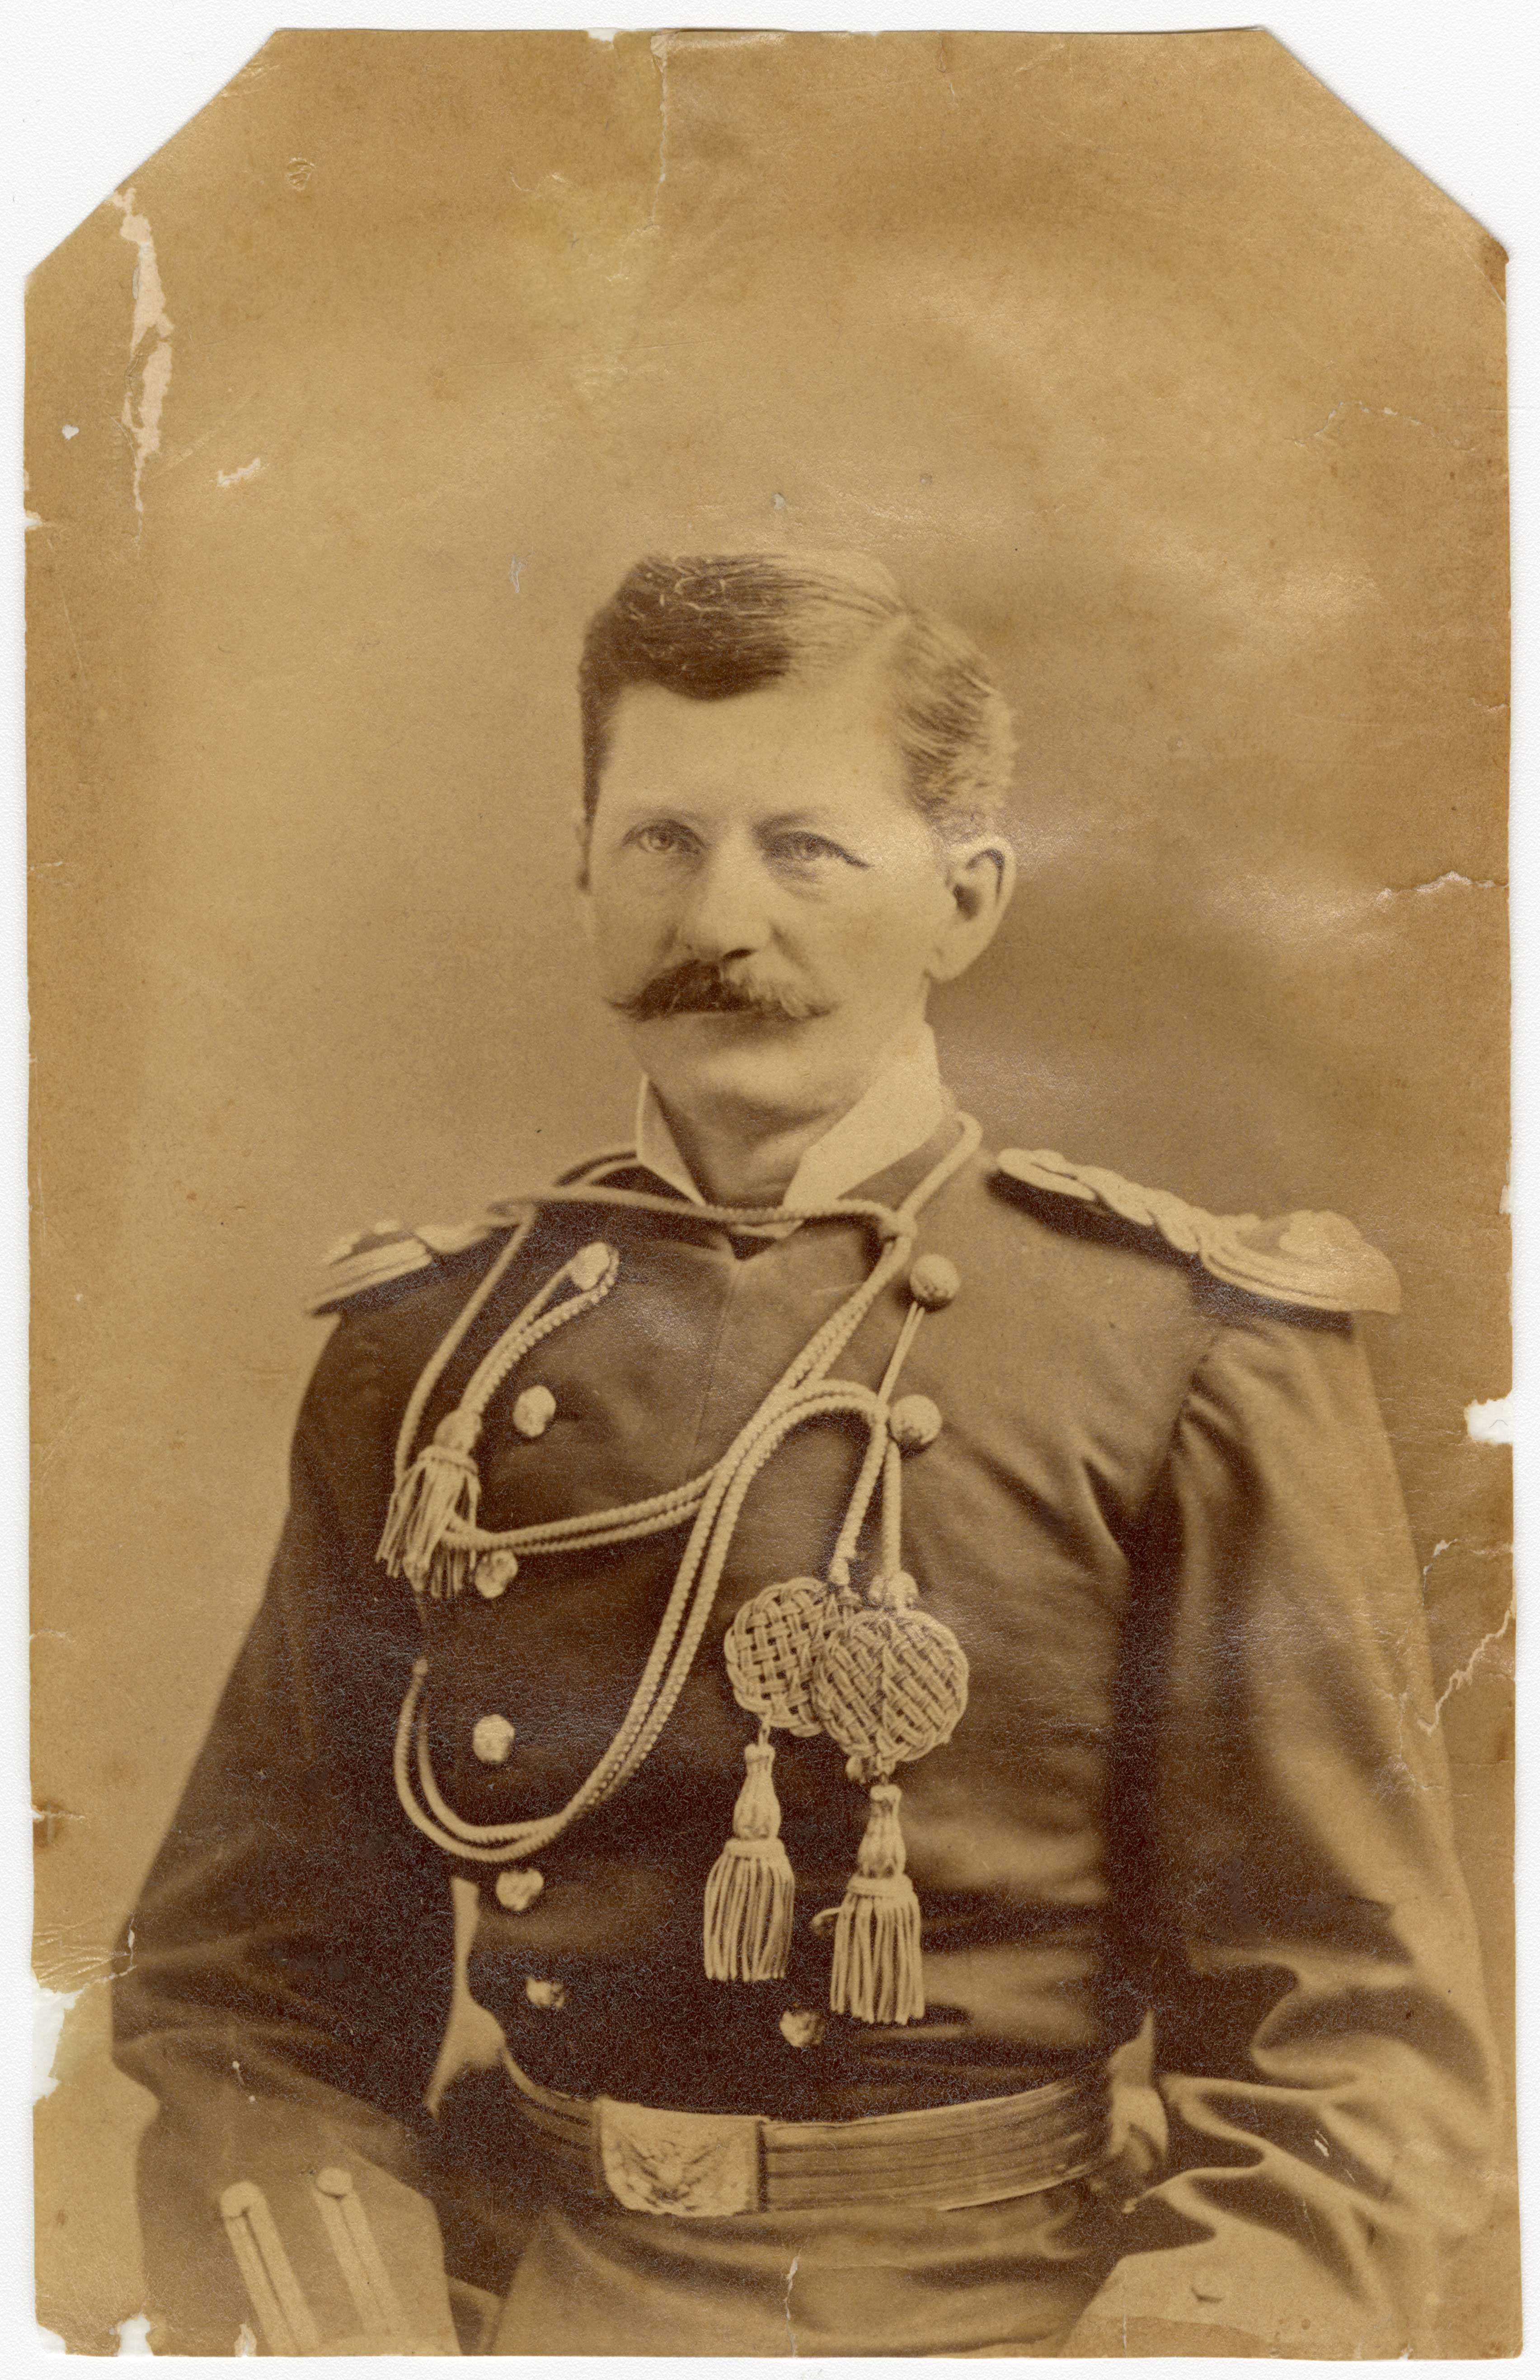 [Studio portrait of Captain John M. Hamilton in 5th Cavalry dress uniform]